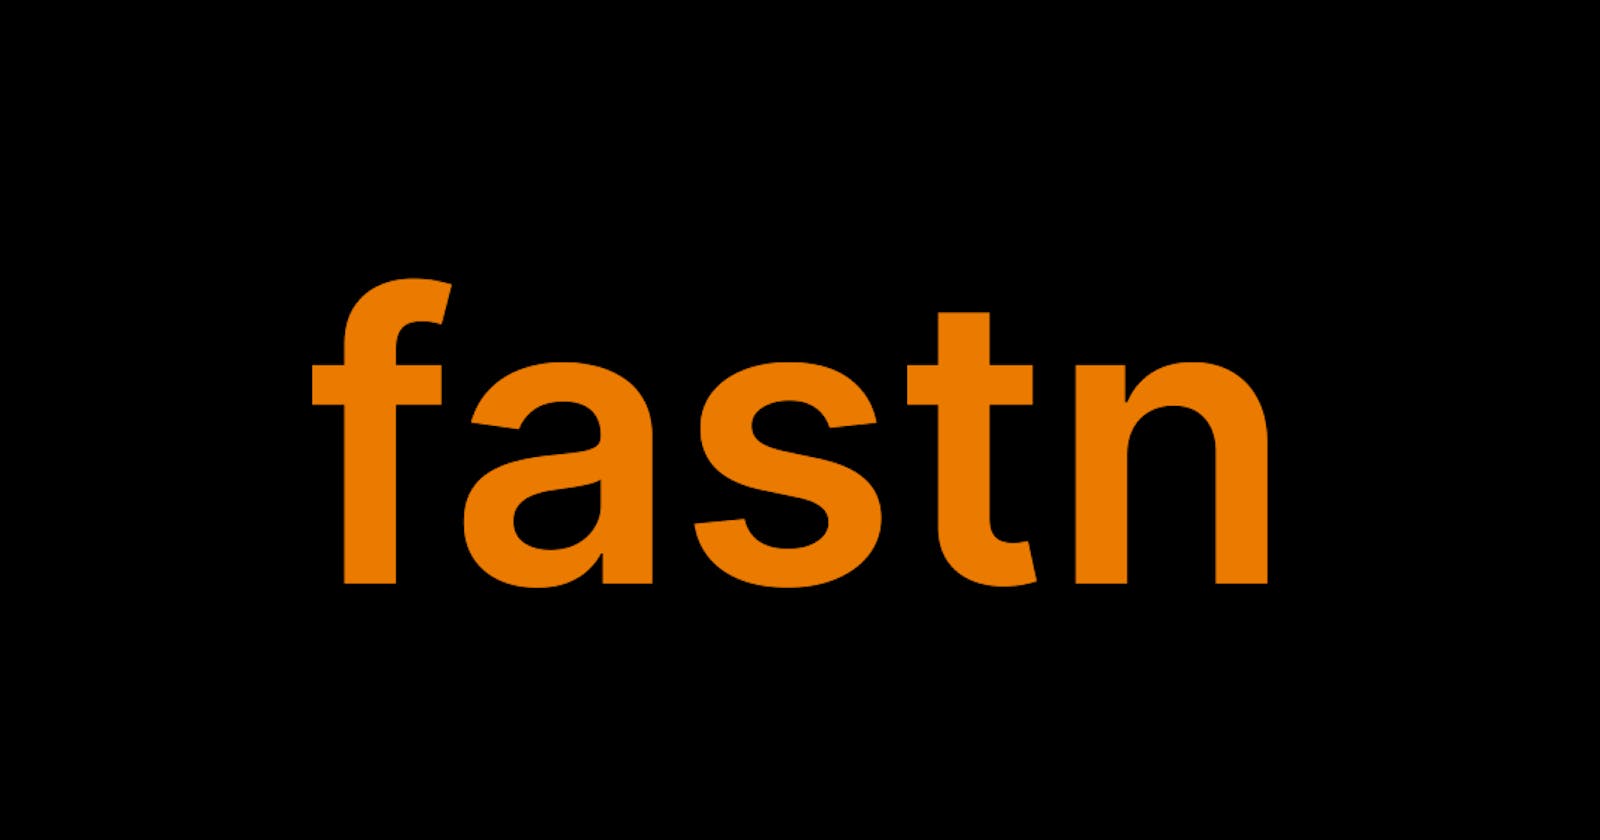 Fastn: The Next-Generation Full-Stack Web Framework